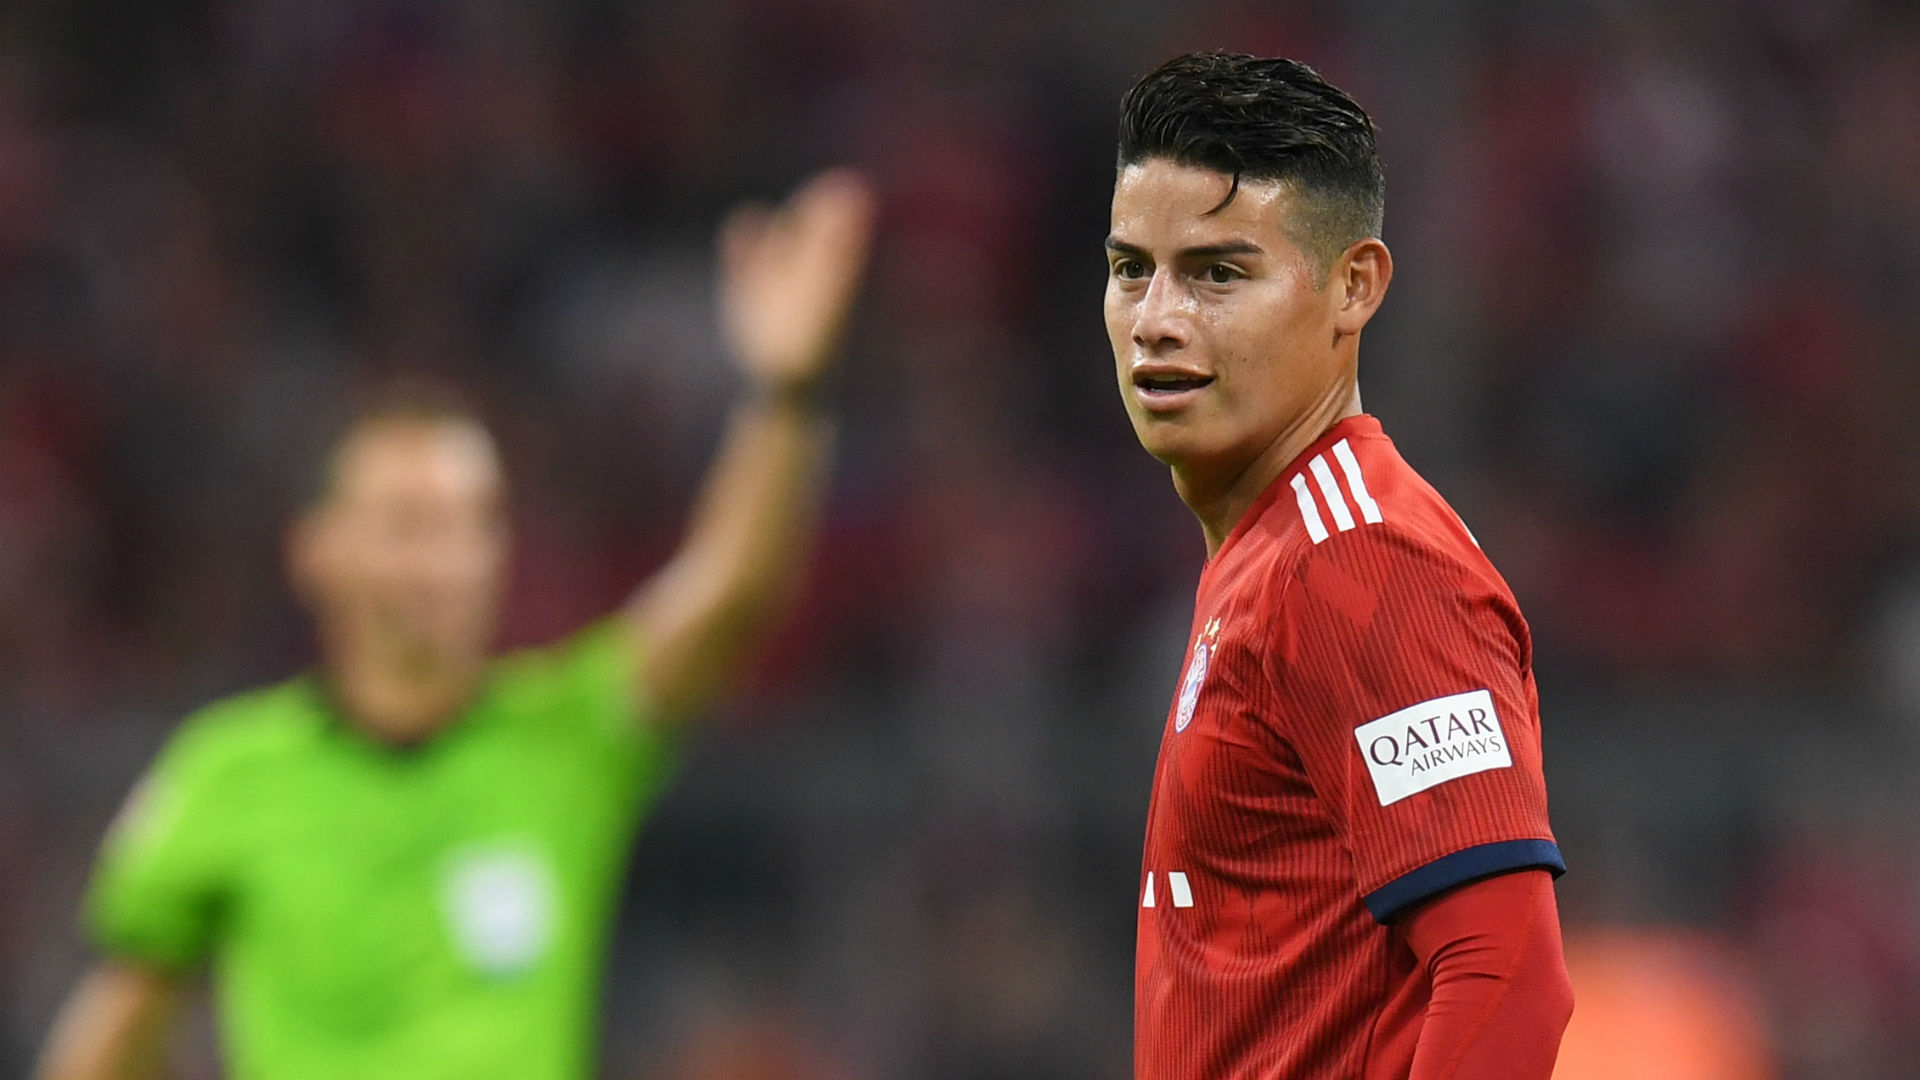 James Rodriguez Bayern Munich 2018-19 - James Rodriguez Bayern 2018 19 , HD Wallpaper & Backgrounds